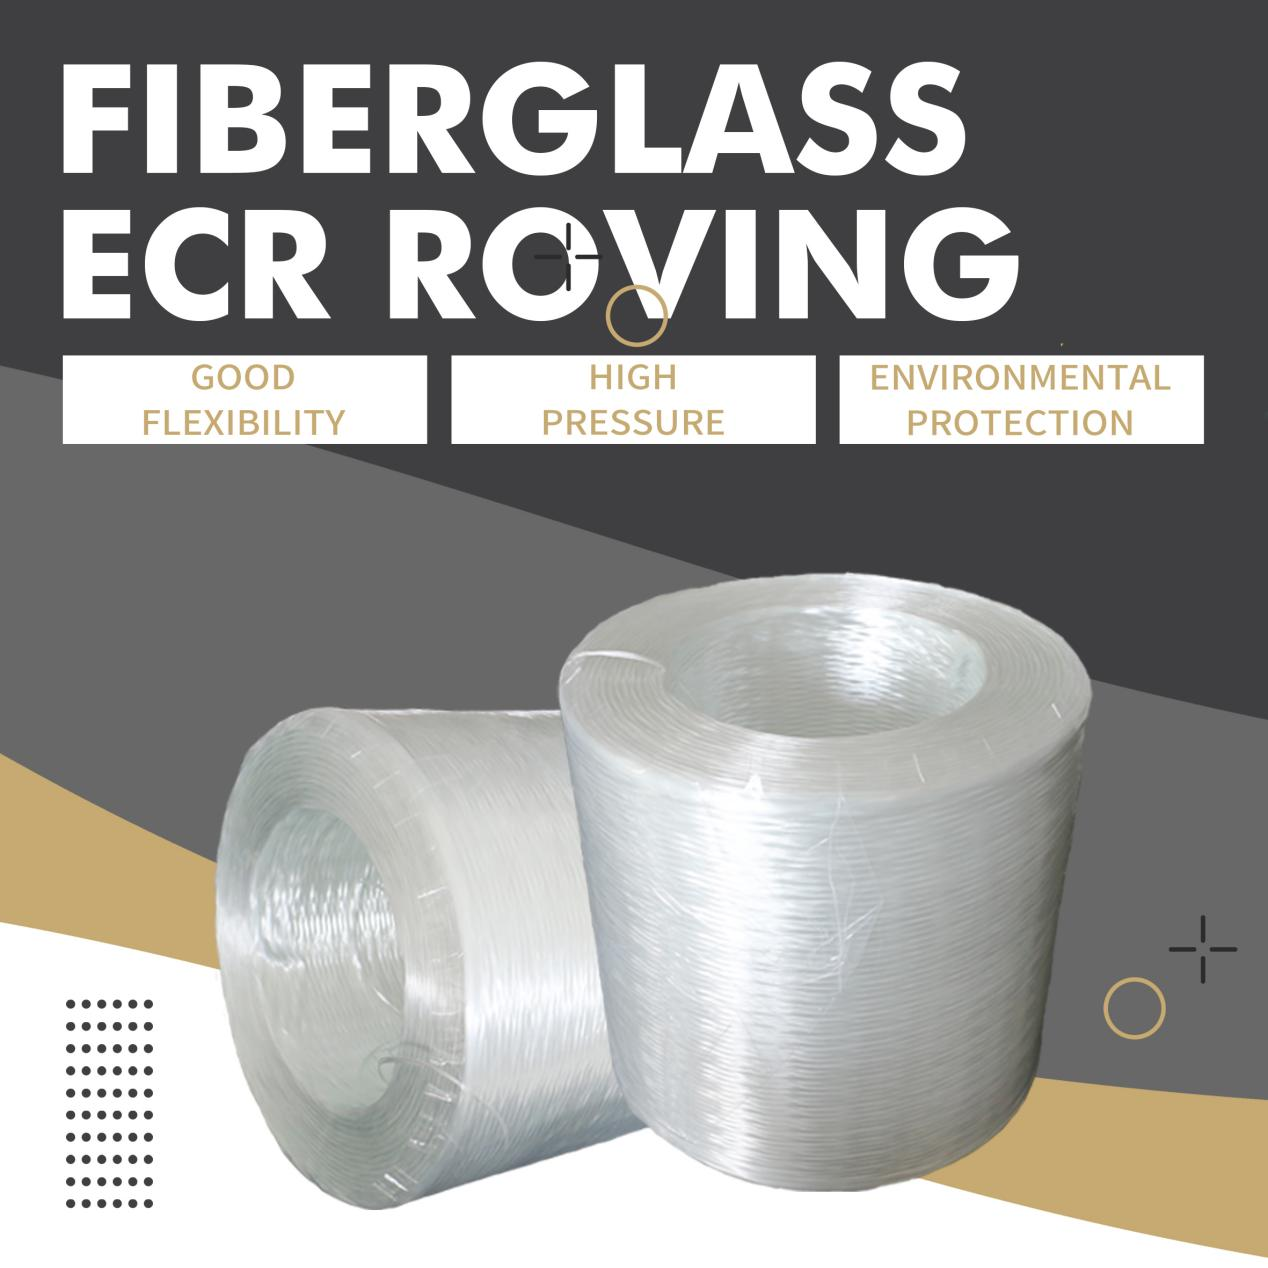 fiberglass ECR roving